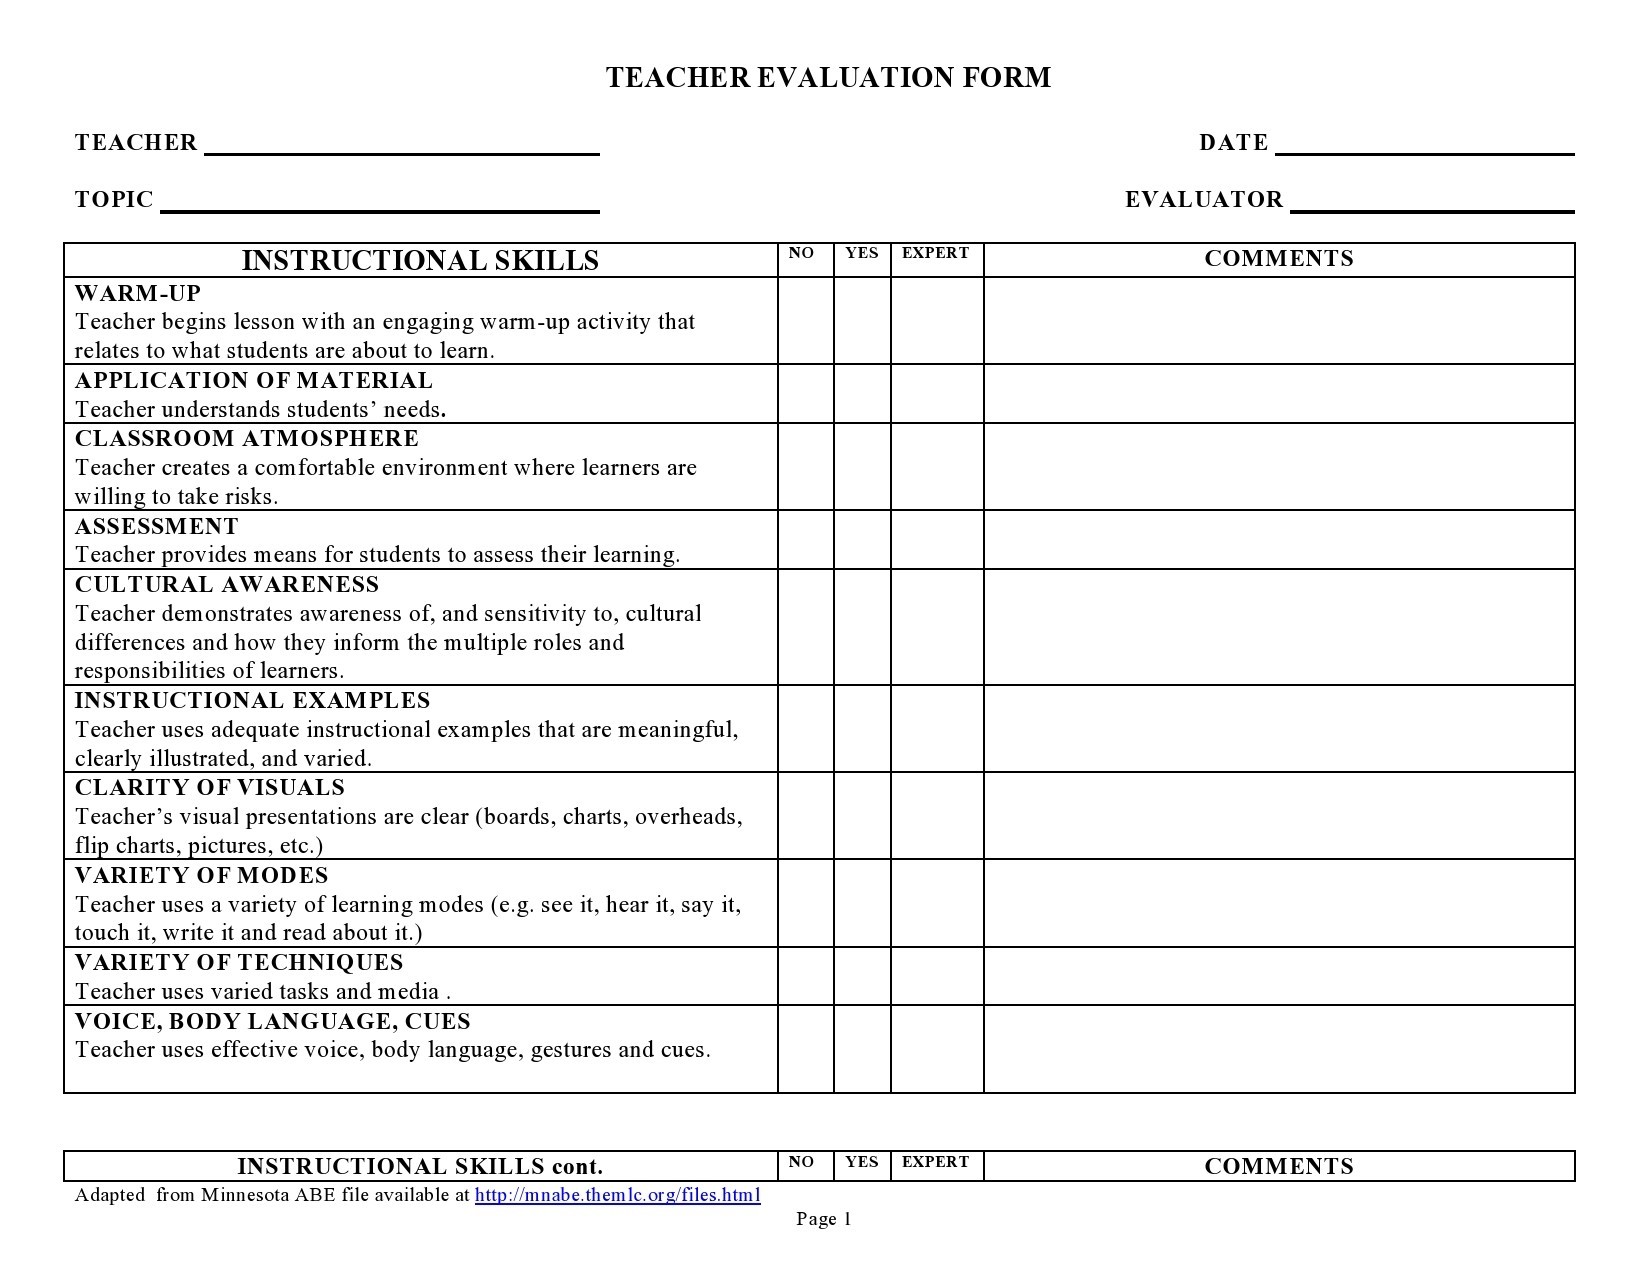 Free teacher evaluation form 45